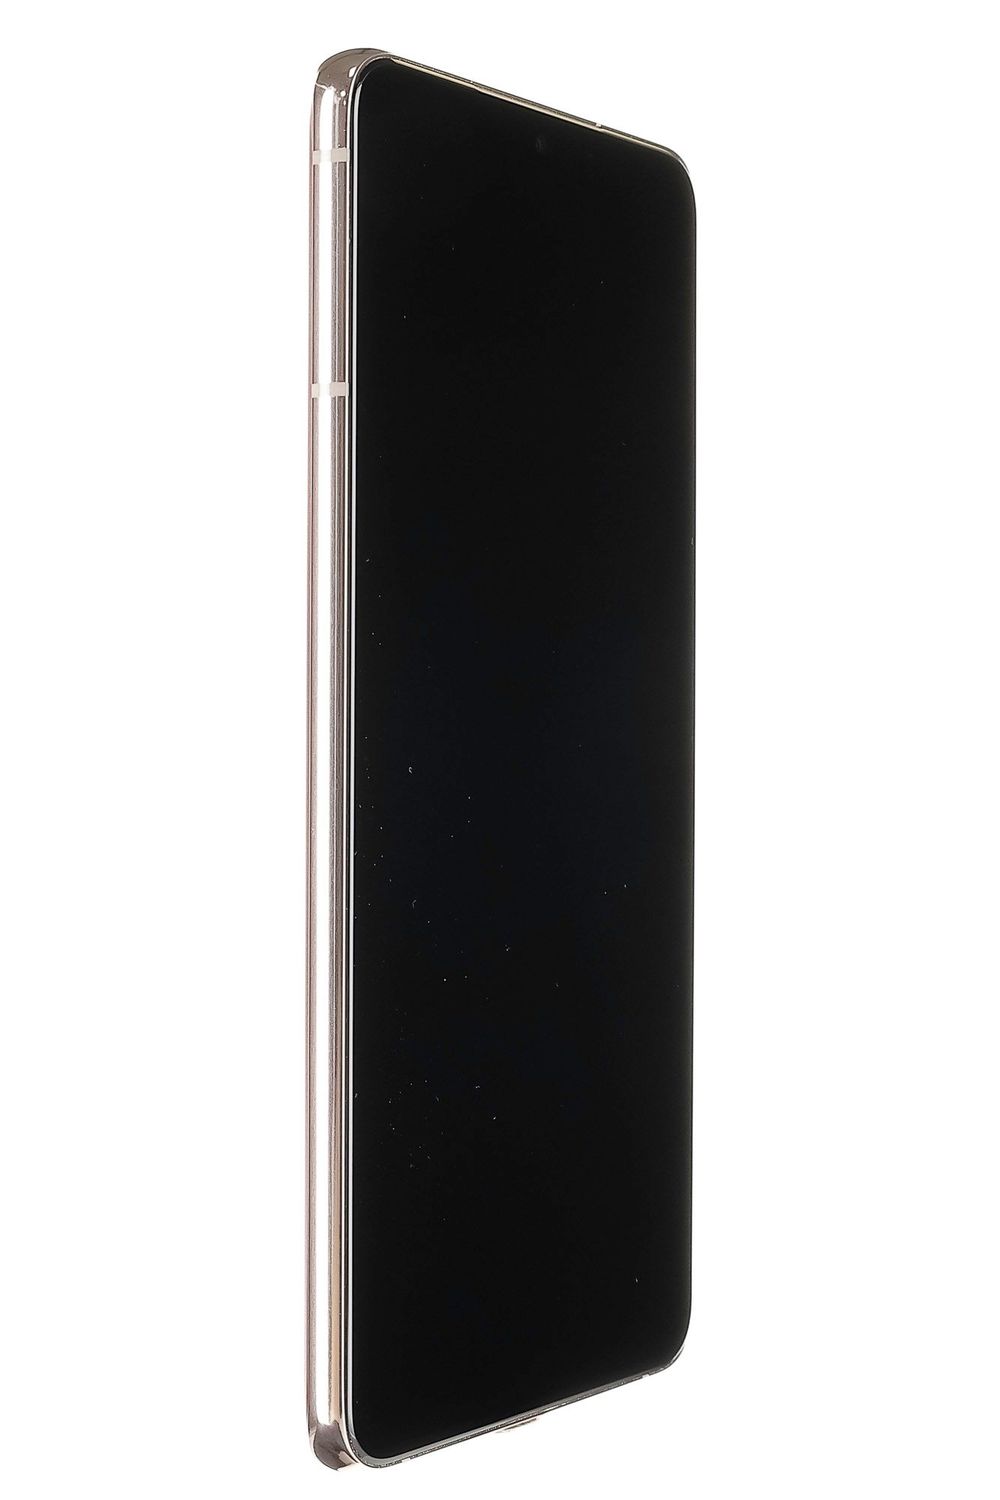 Мобилен телефон Samsung Galaxy S21 Plus 5G, Red, 128 GB, Bun